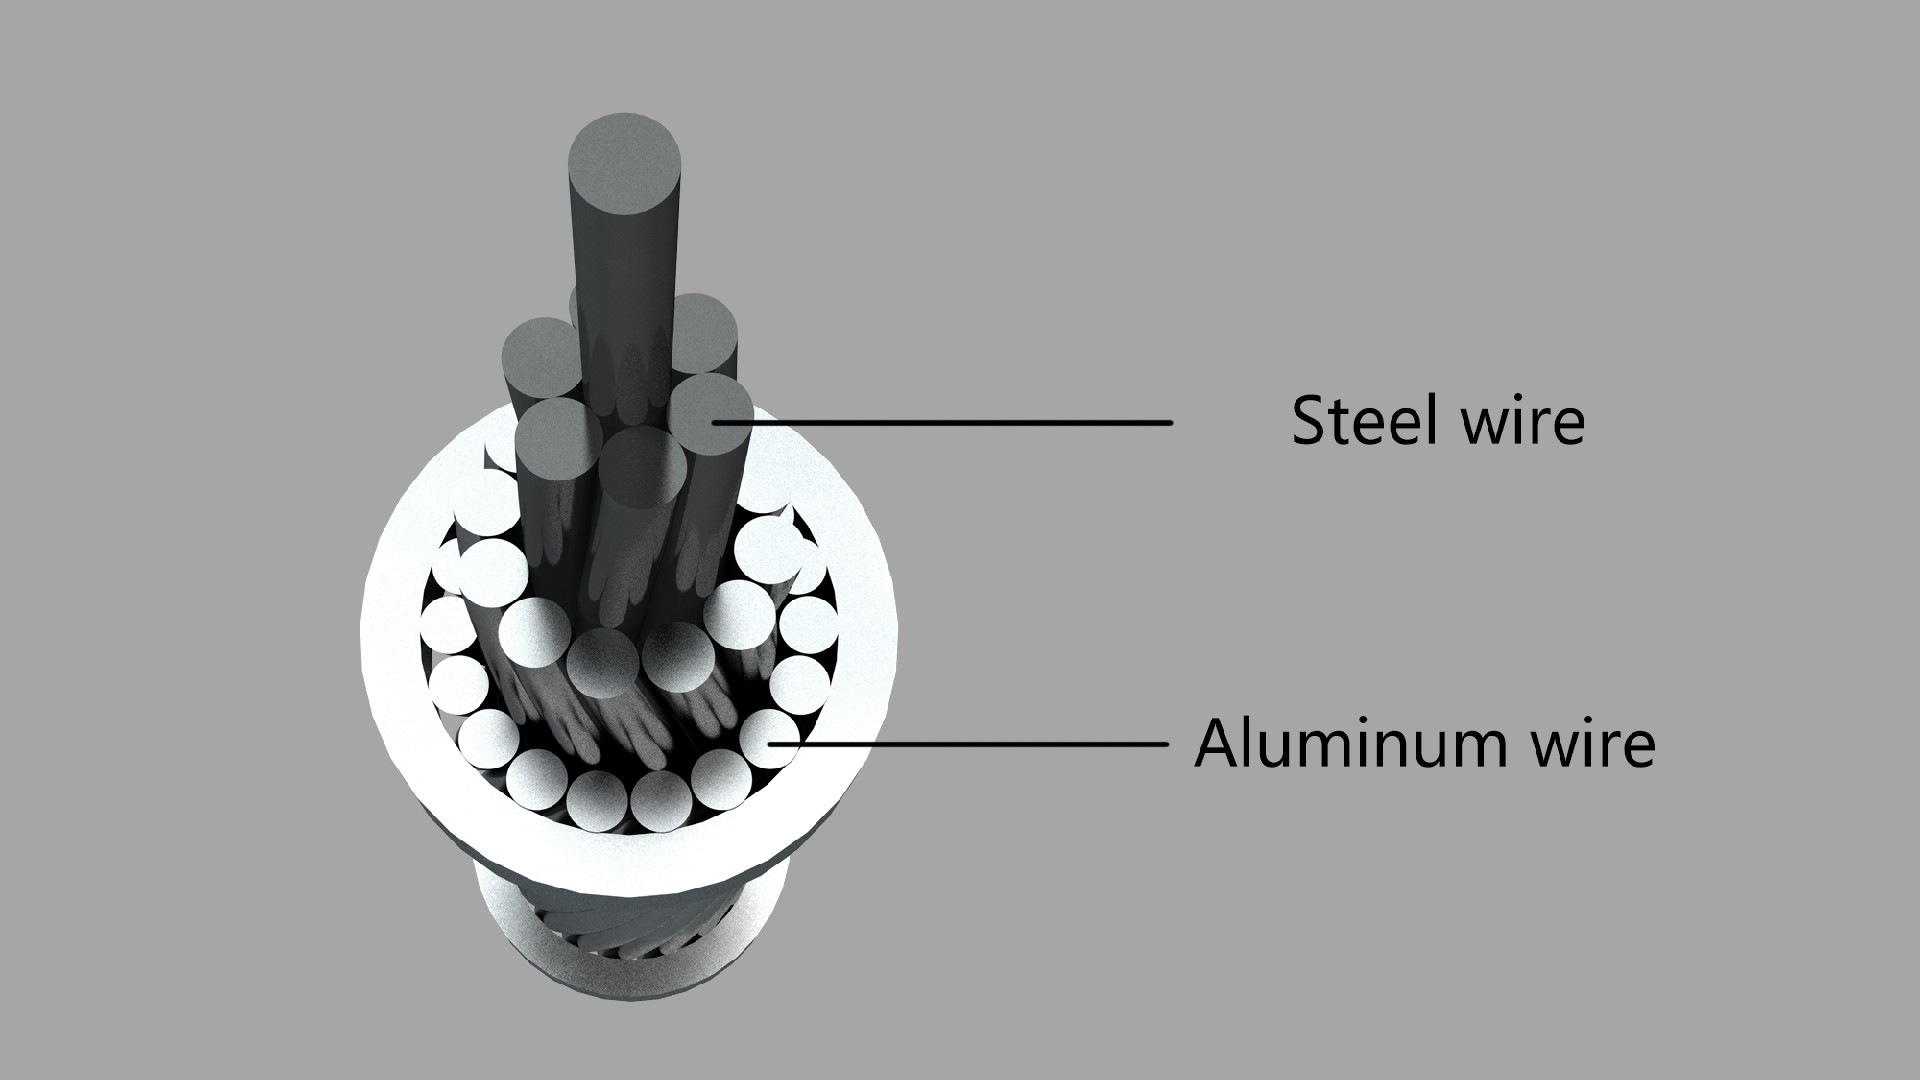 ACSR Conductor (Aluminium Conductor Steel Reinforced)